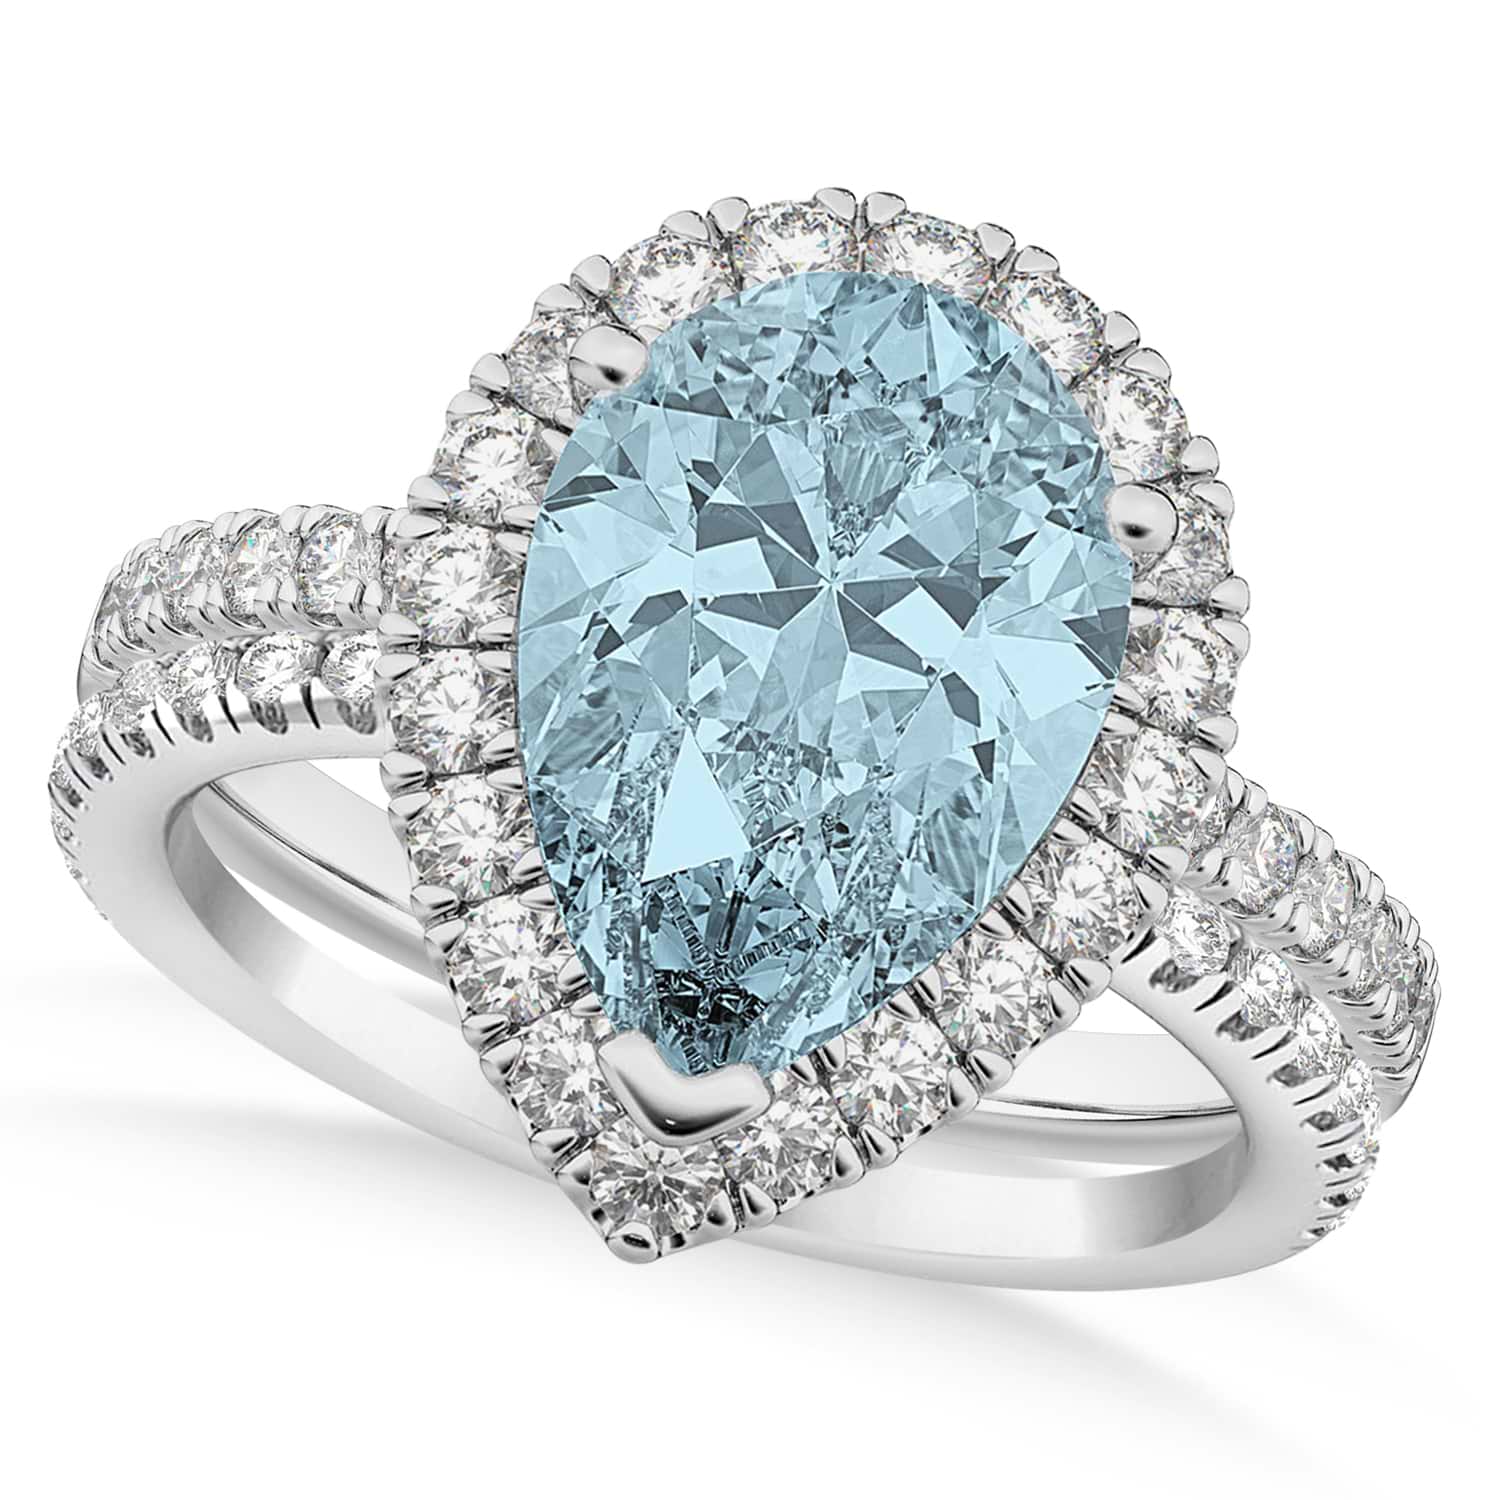 Aquamarine & Diamonds Pear-Cut Halo Bridal Set 14K White Gold (2.63ct)